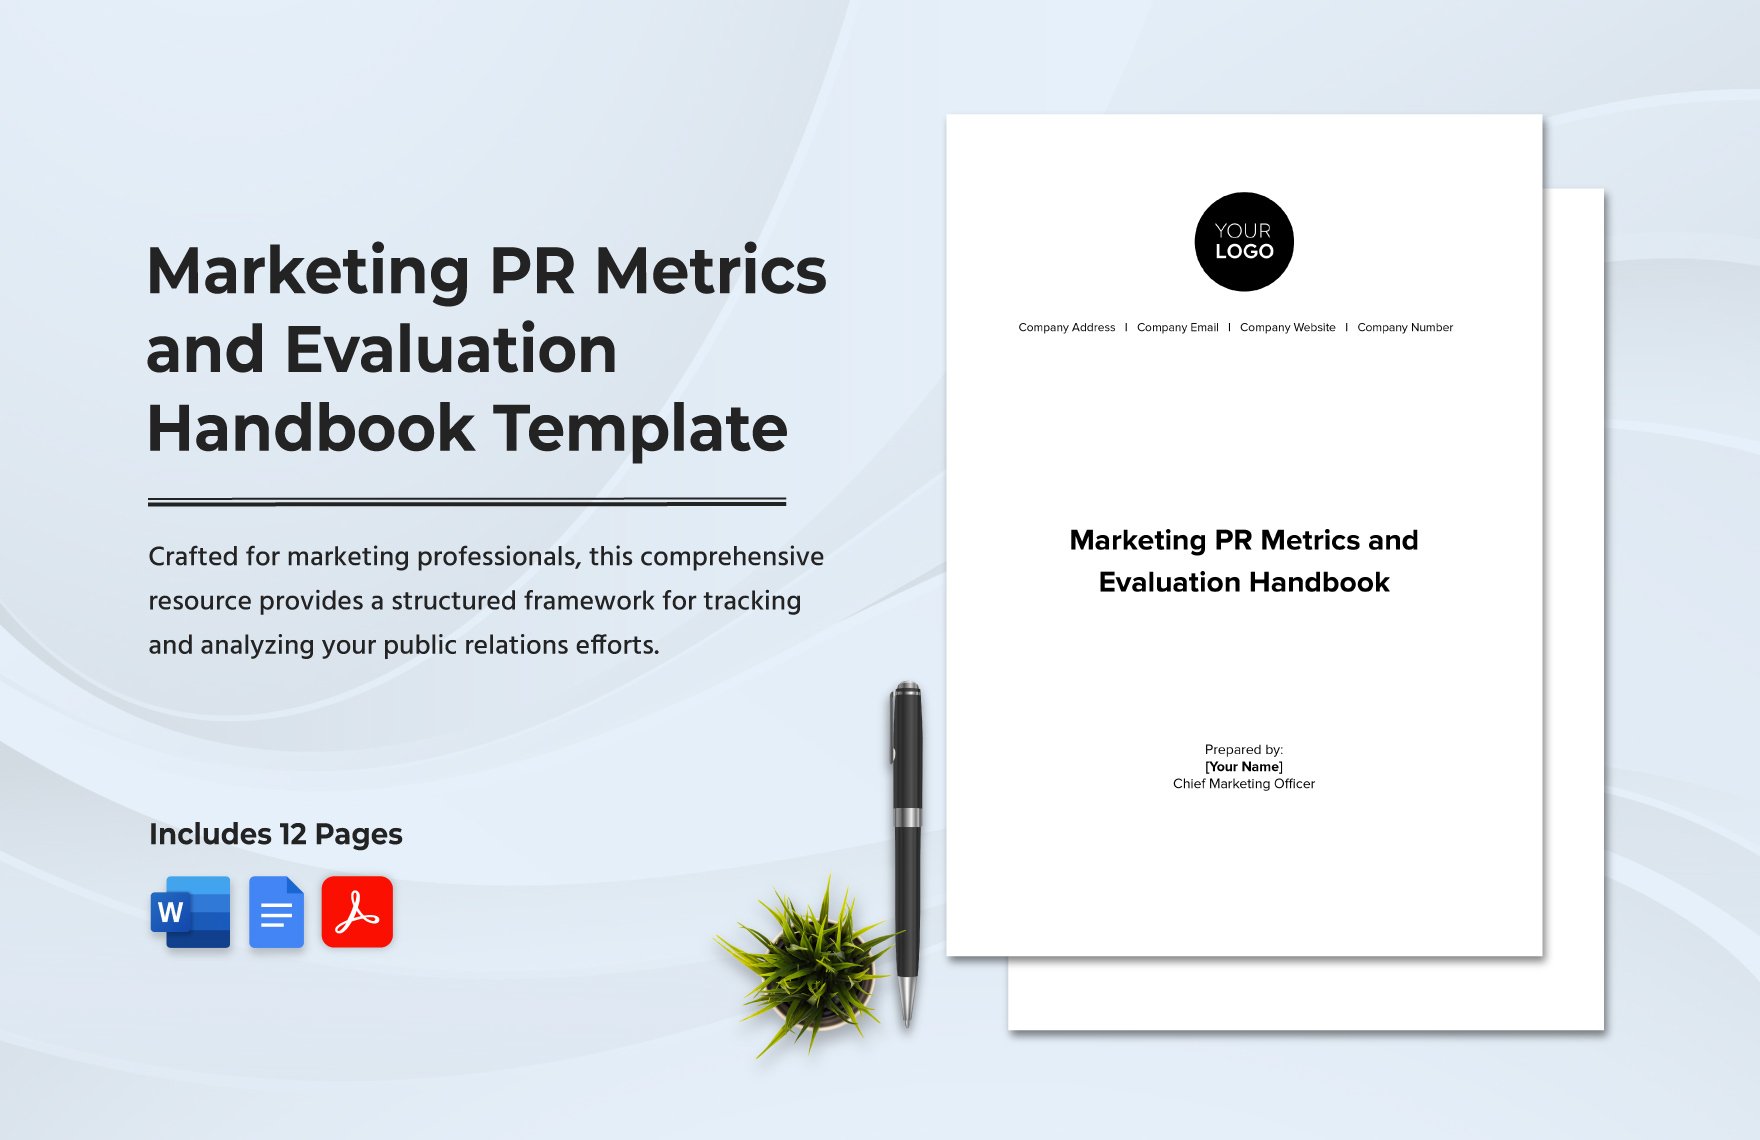 Marketing PR Metrics and Evaluation Handbook Template